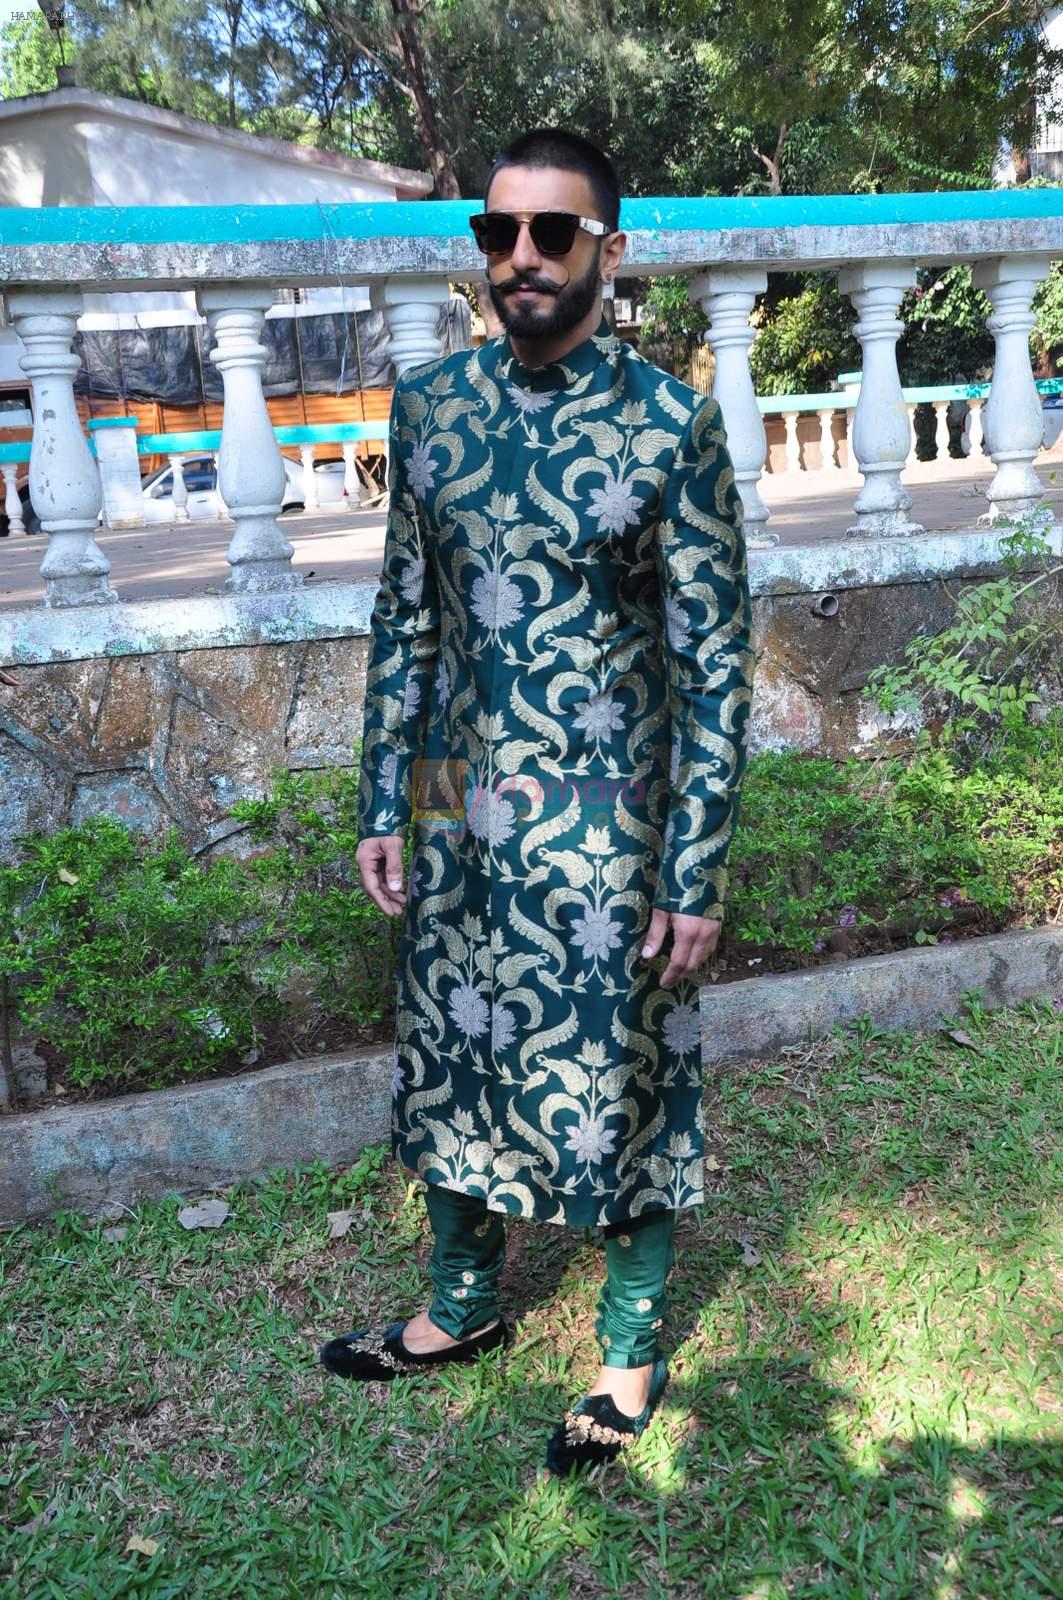 Ranveer Singh on the sets of colors show swaragini on 7th Dec 2015